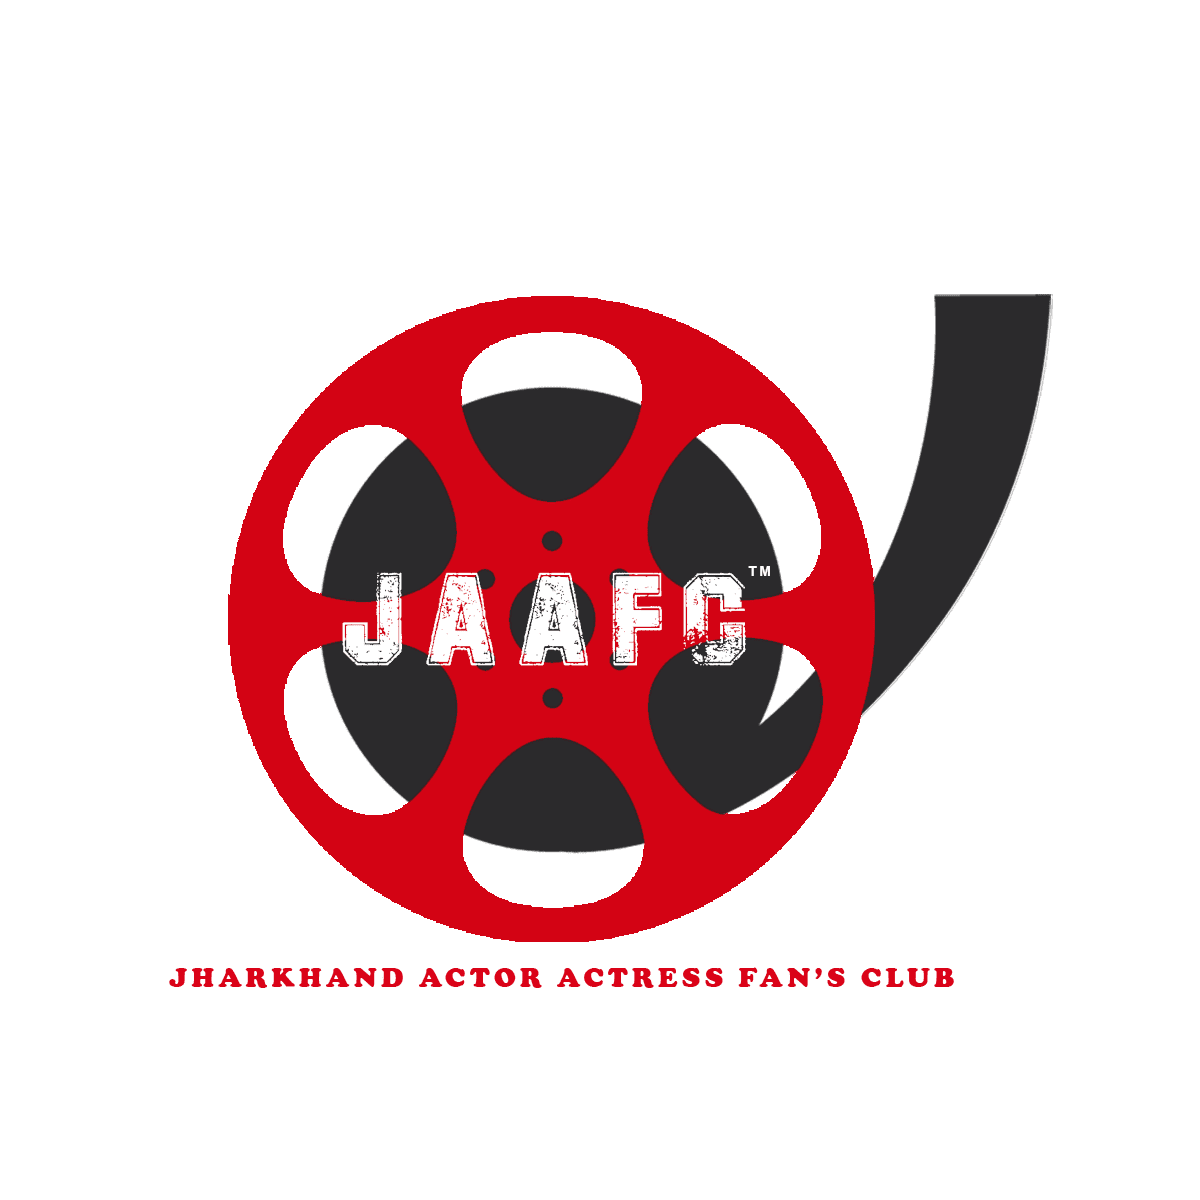 Jharkhand Actor/Actress Fan's Club